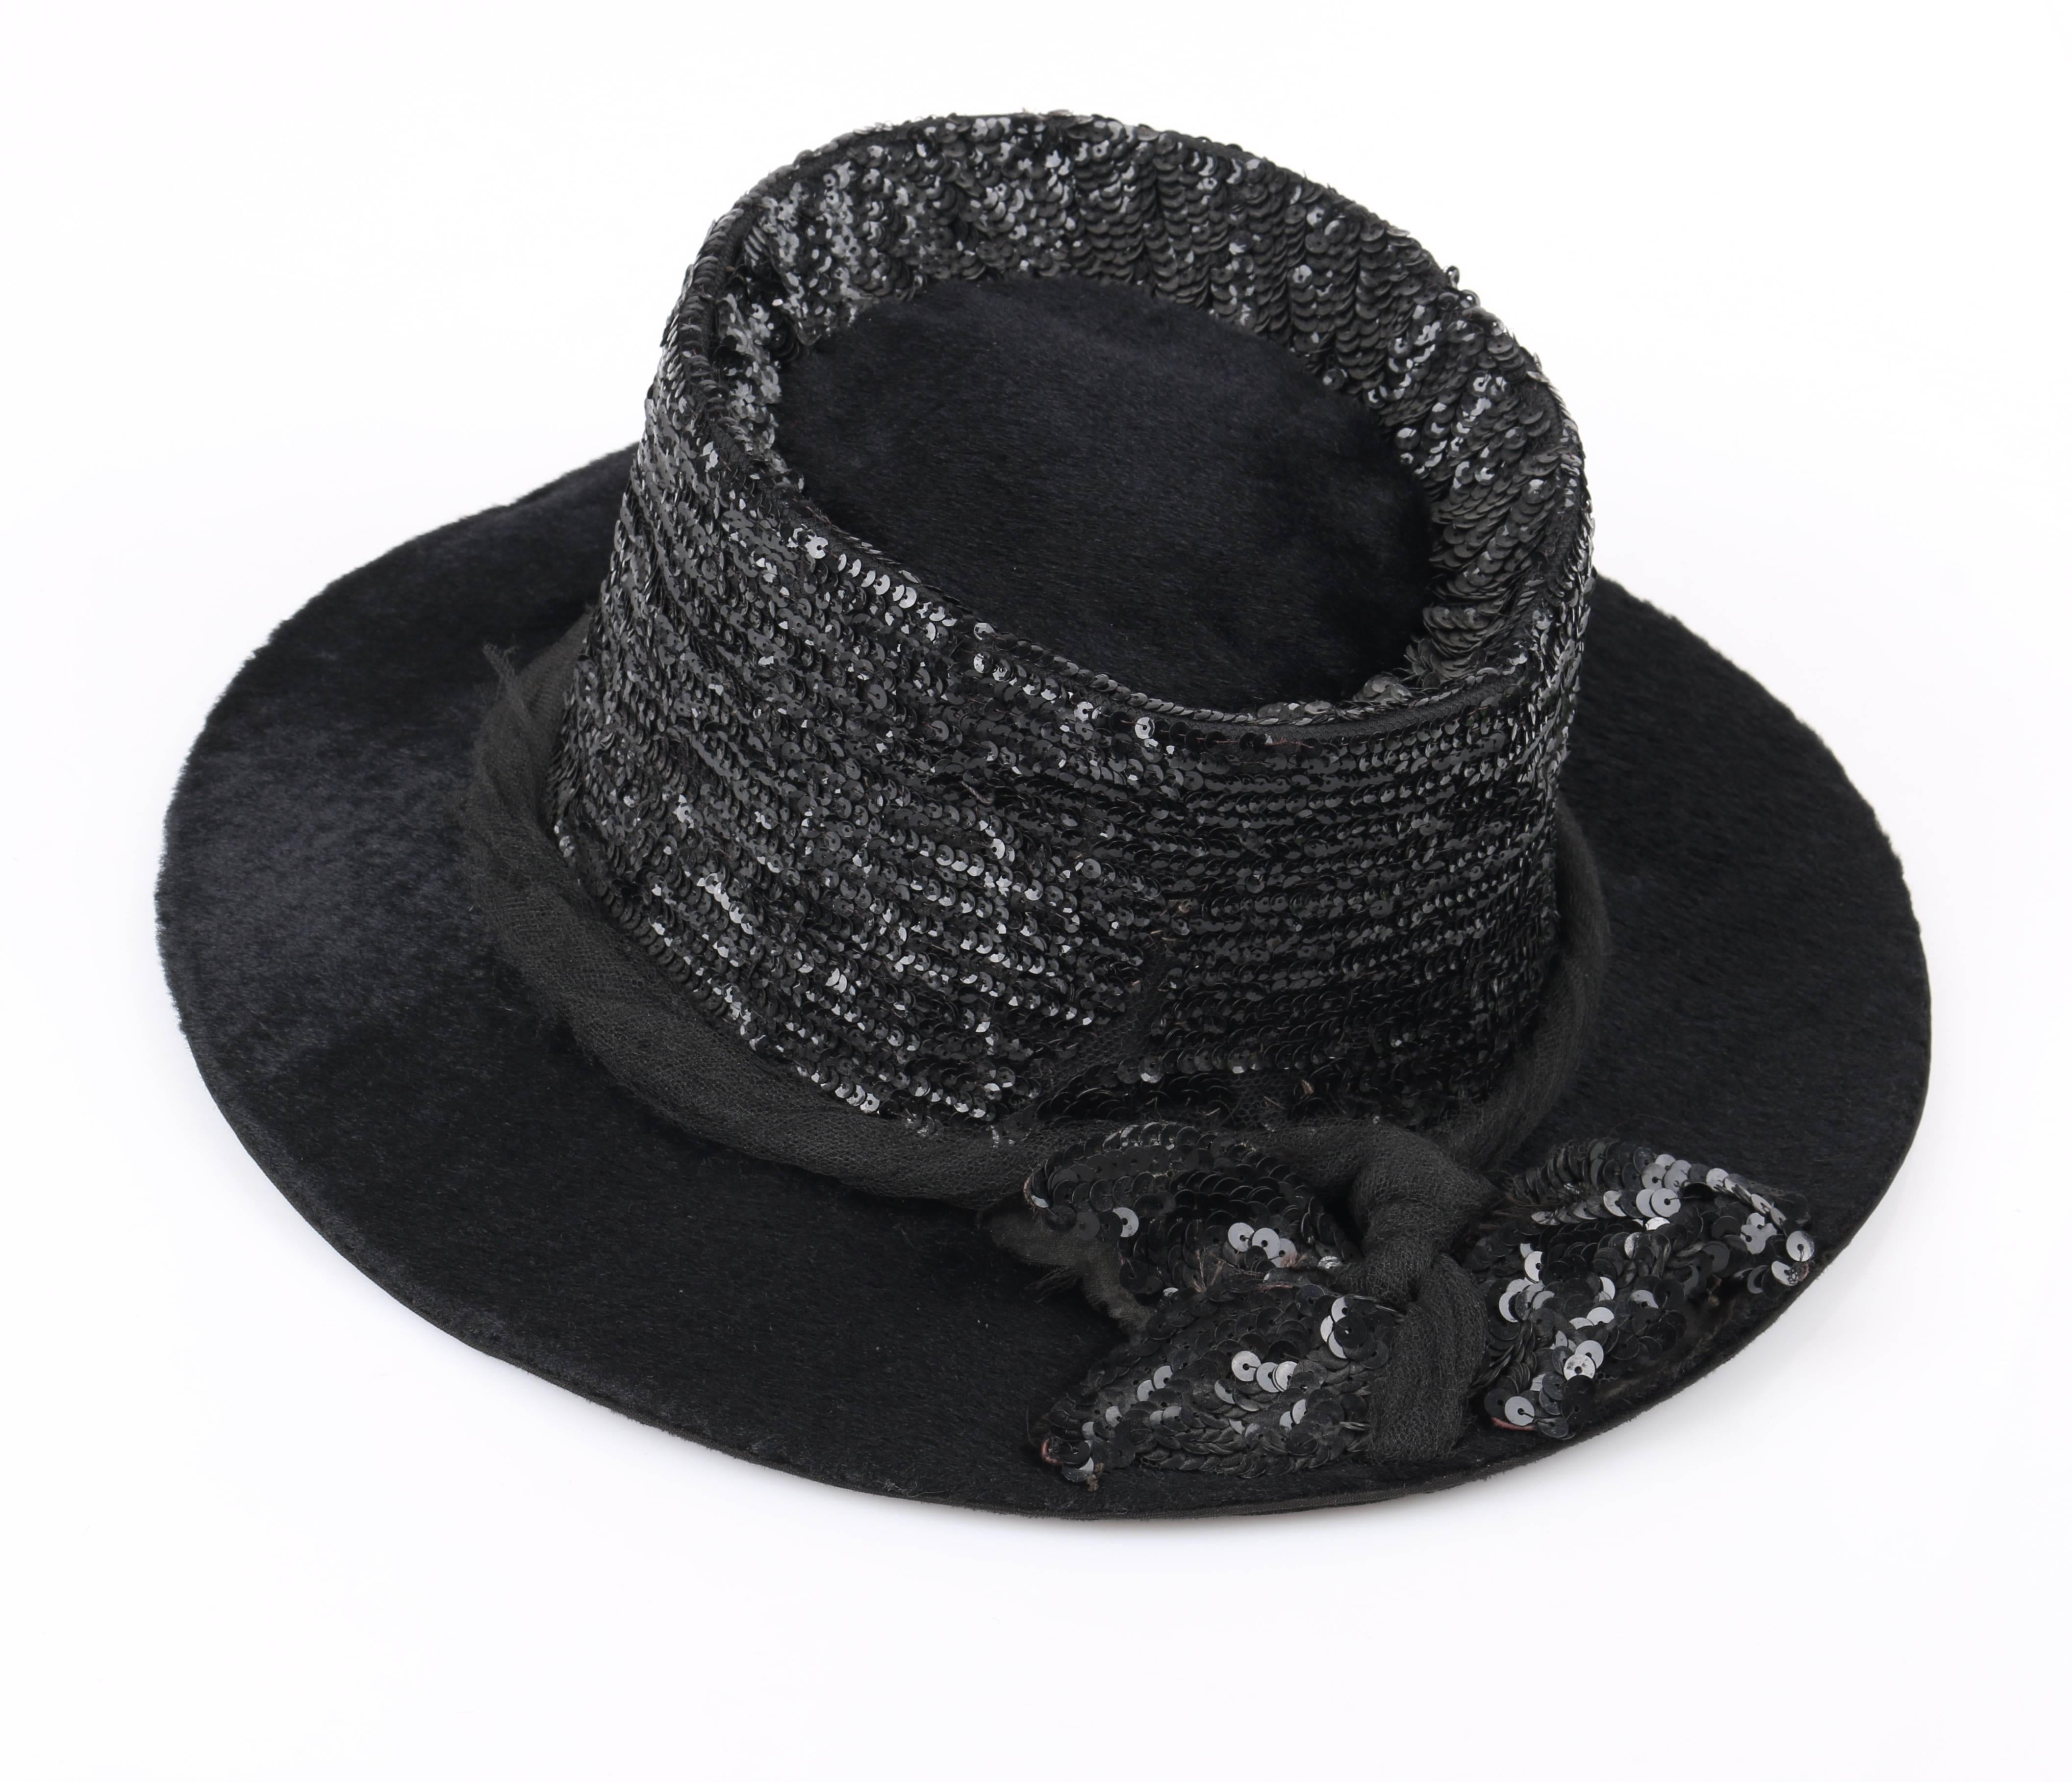 1900s hat